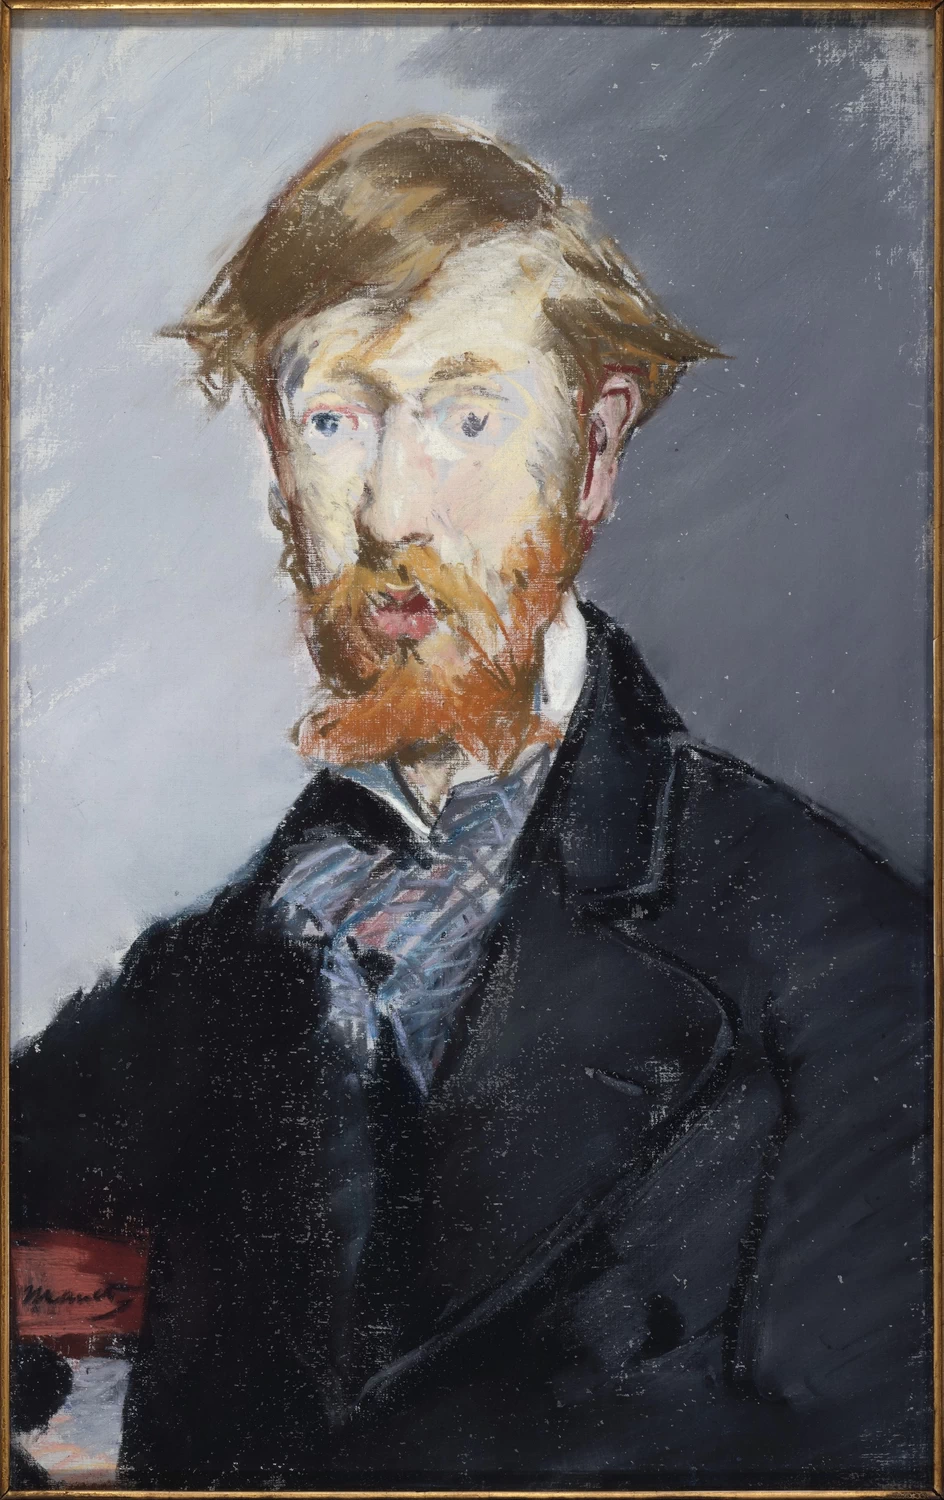  291-Édouard Manet, Ritratto di George Moore, 1879-Metropolitan Museum of Art, New York